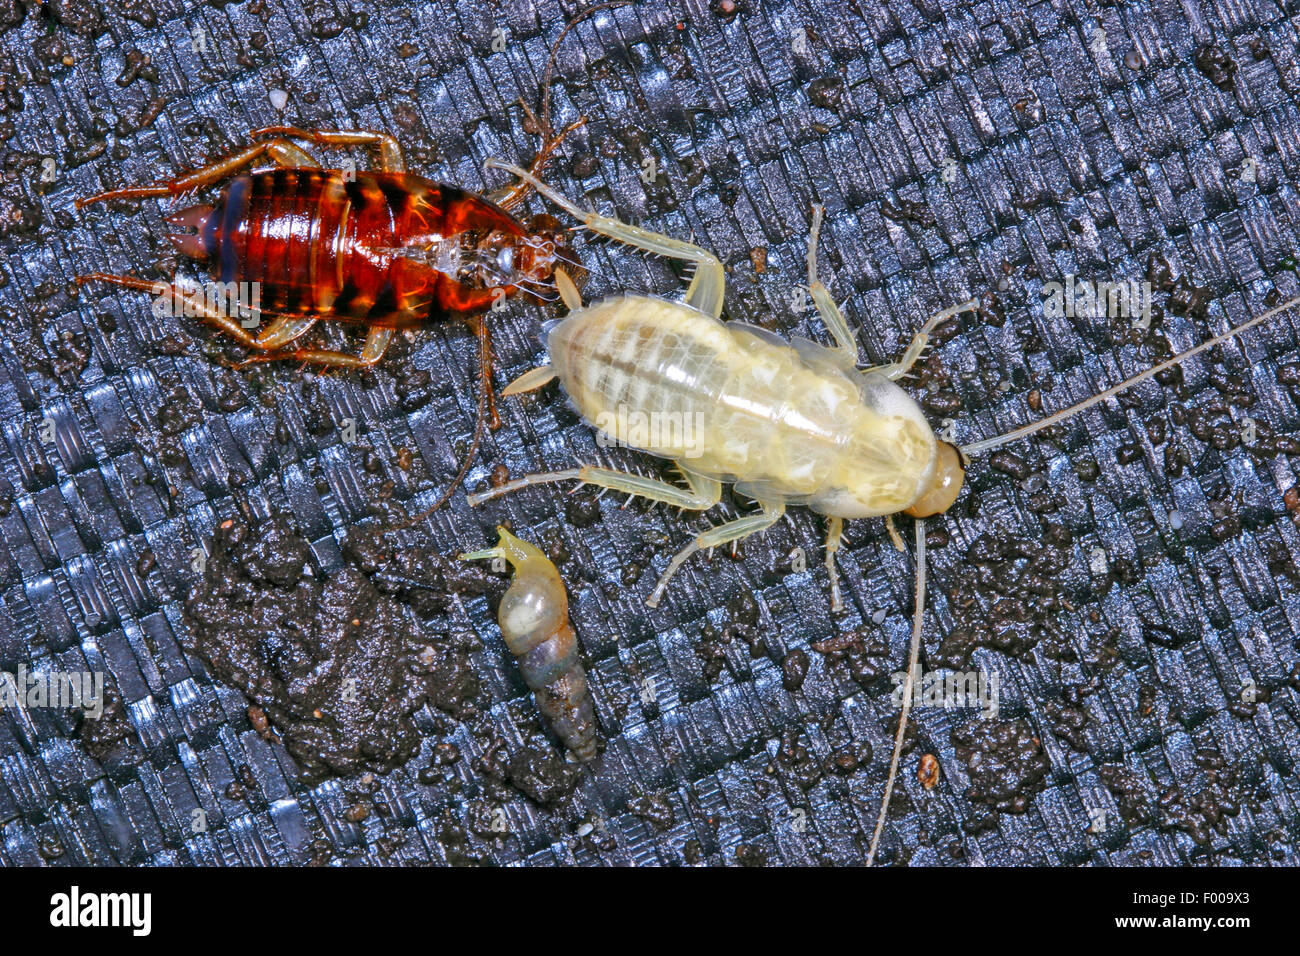 Cucaracha (Periplaneta australasiae australiana, Blatta australasiae), dos cucarachas, uno de ellos emitía su piel, Alemania Foto de stock